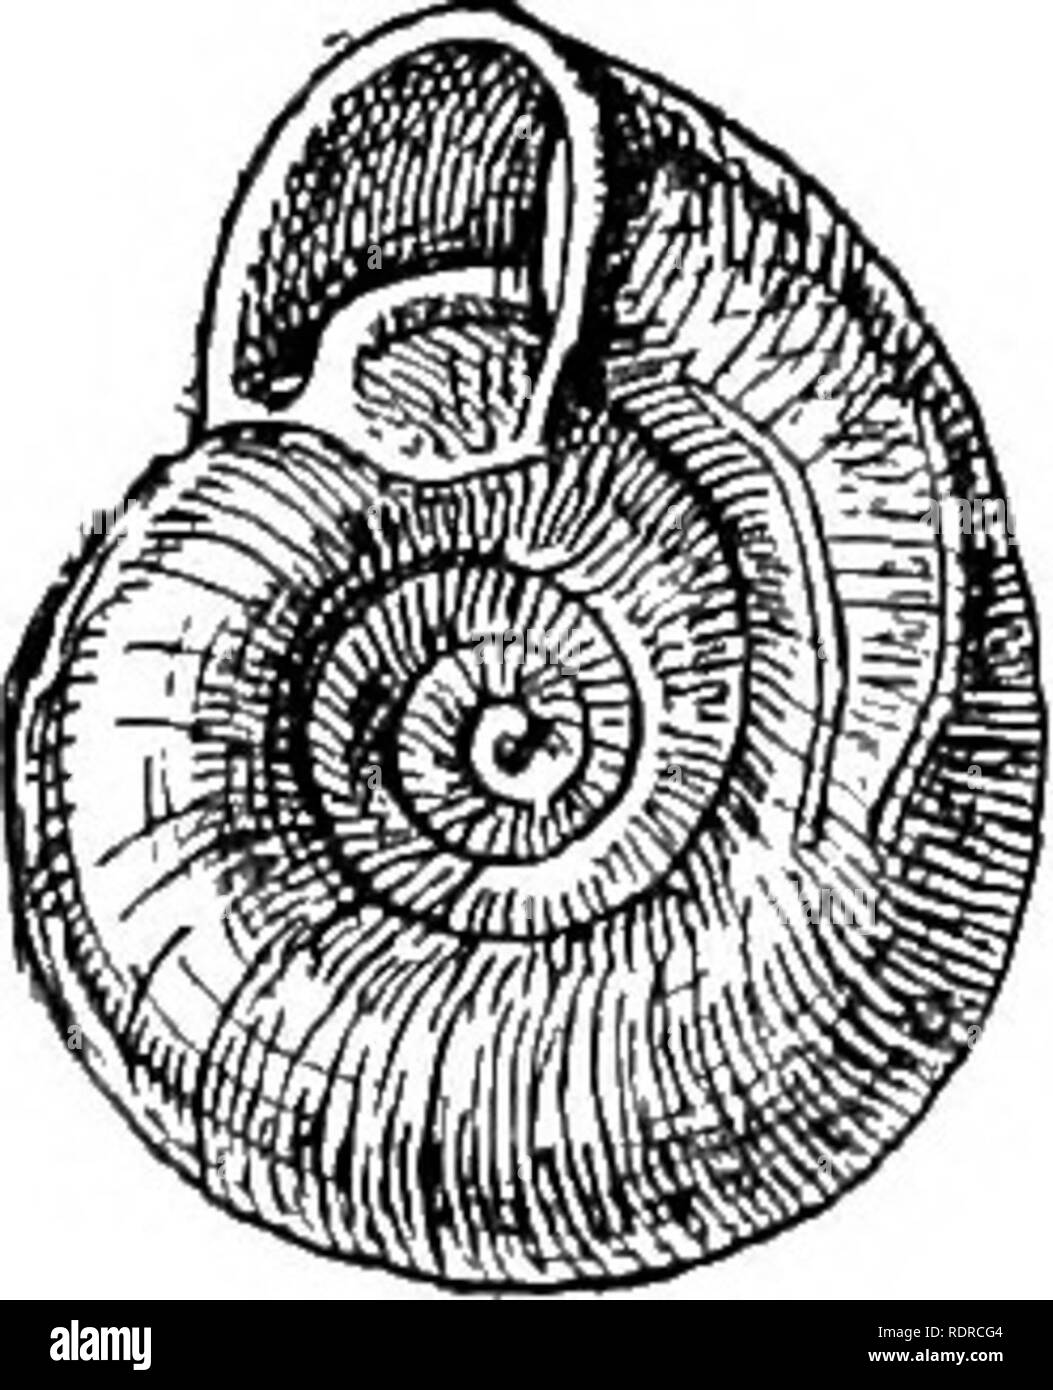 . Mollusca ... Mollusks. 66 HBLICIDjE. 74. Gorilla erronea, Alhers. HelLv rivoli, Pfeiffer (uon Deshayes), Mon. Ilelic. Viv. i, 1848, p. 407; Reeve, Conch. Icon, vii, 1852, pi. 78, fi^. 413; Pfeiffer, CoDch.- Cab., Ileliceeii, ii, 1852, p. 288, pi. Ill', figs. 16-19; iii, 18-53, pi. 160, iigs. 8-11,14, 15. Helix erronea. Albers, Zeits. Malak. x, 1853, p. 107 ; Kobelt, Illust. Conch. Buch, 1879, pi. 68, fig. 37; Brot, Journ. Conchyl. xii, 1864, pi. 2, figs. 7-9. Anchistoma (Corilla) erroneum, Adams, Gen. Rec. Moll, ii, 1865, p. 208. Corilla erronea, Frauenfeld, Verh. K. K. zool.-bot. Ges. xix,  Stock Photo